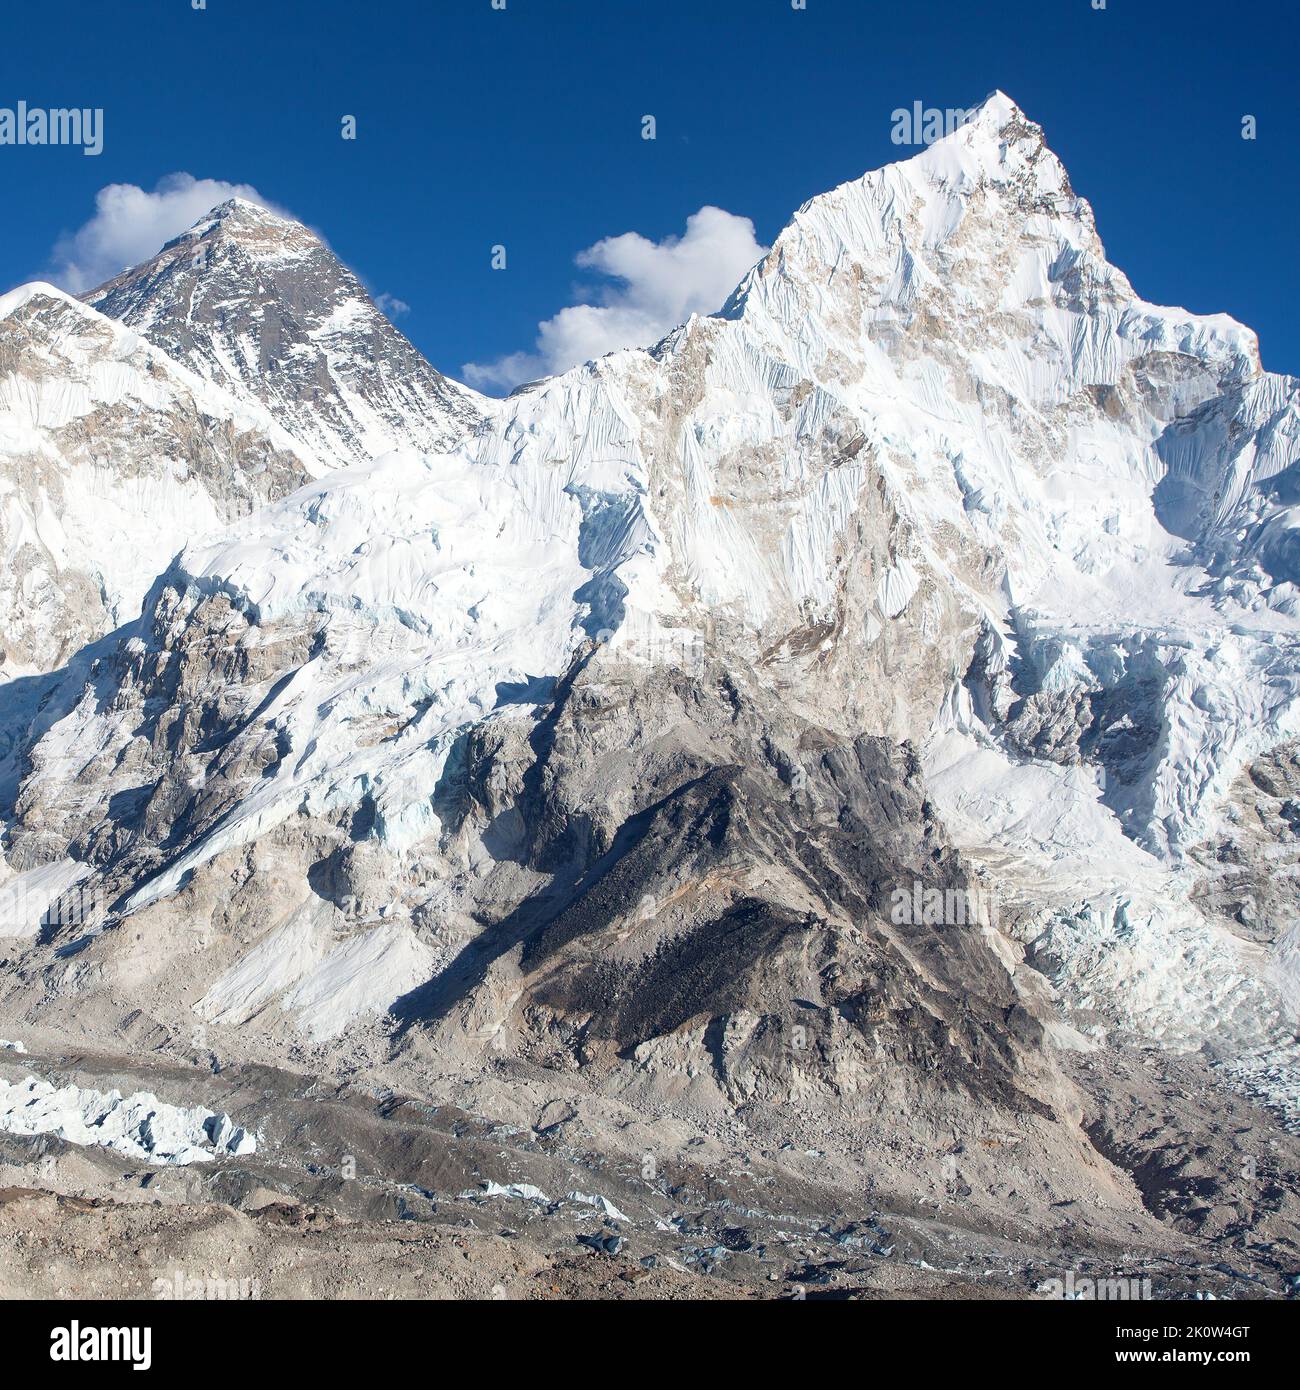 Panoramic view of mount Everest and mt. Nuptse, Khumbu valley and glacier, Sagarmatha national park, Nepal Himalayas mountains Stock Photo